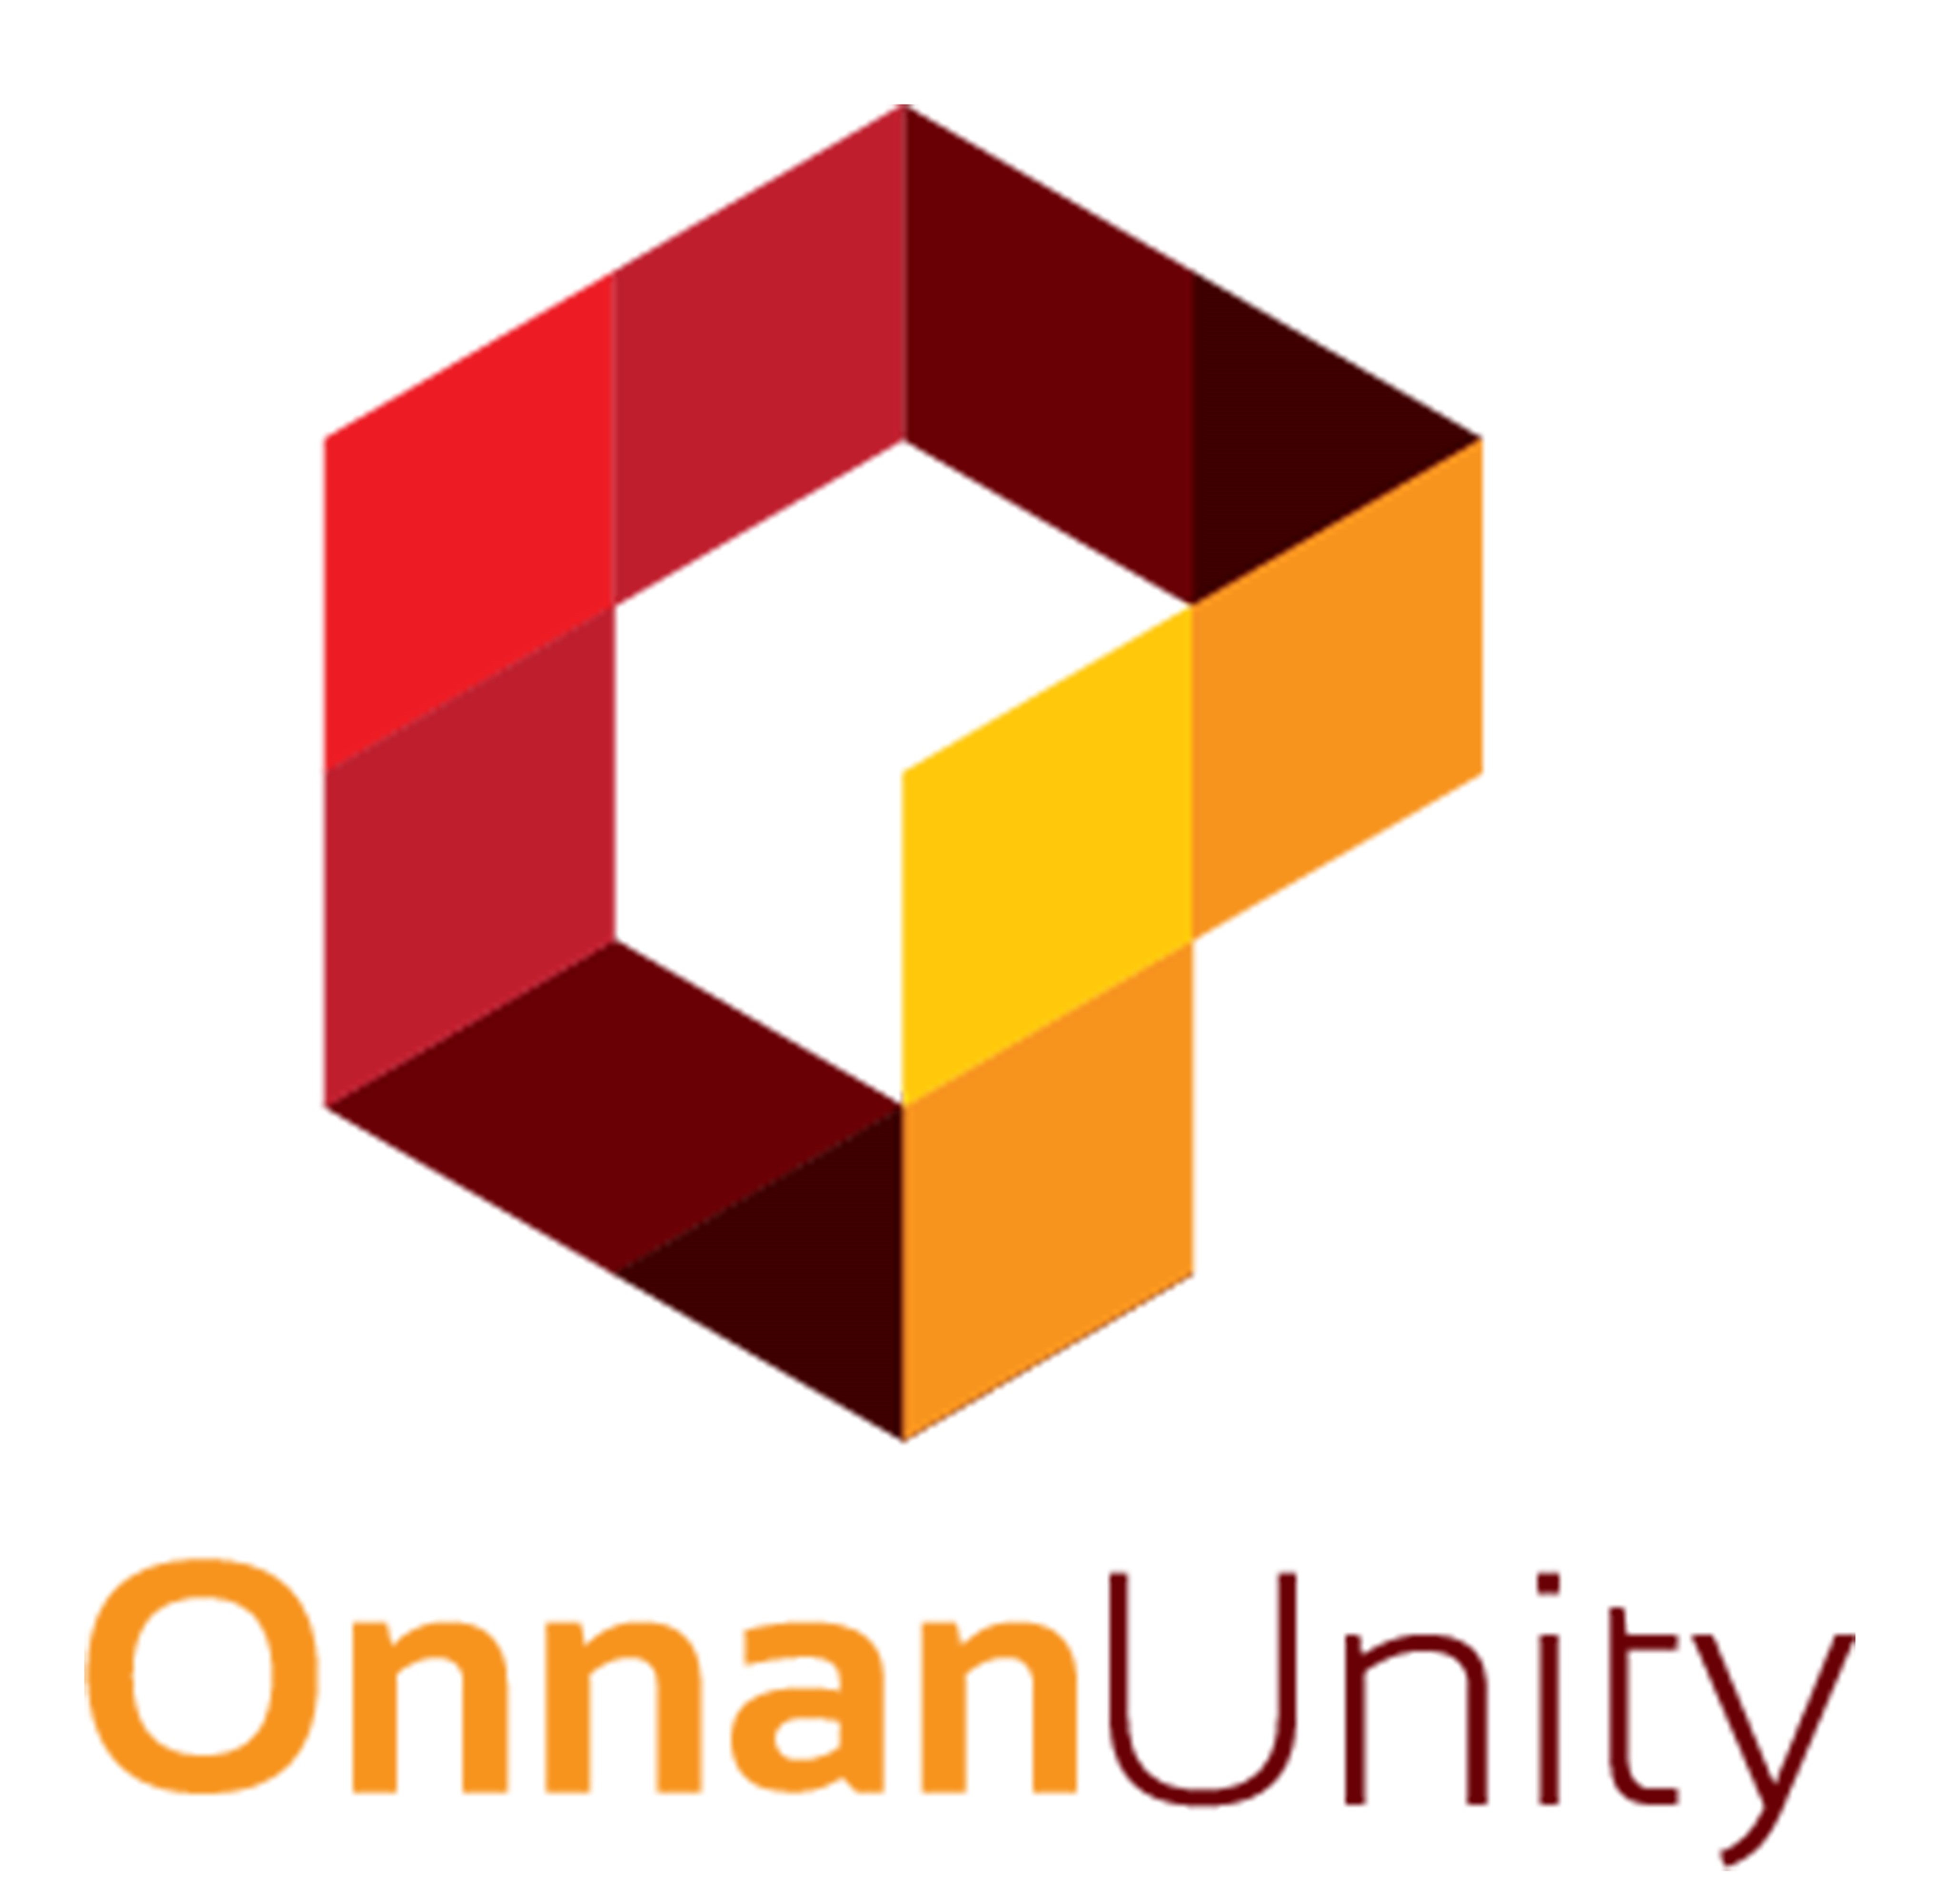 Onna Unity